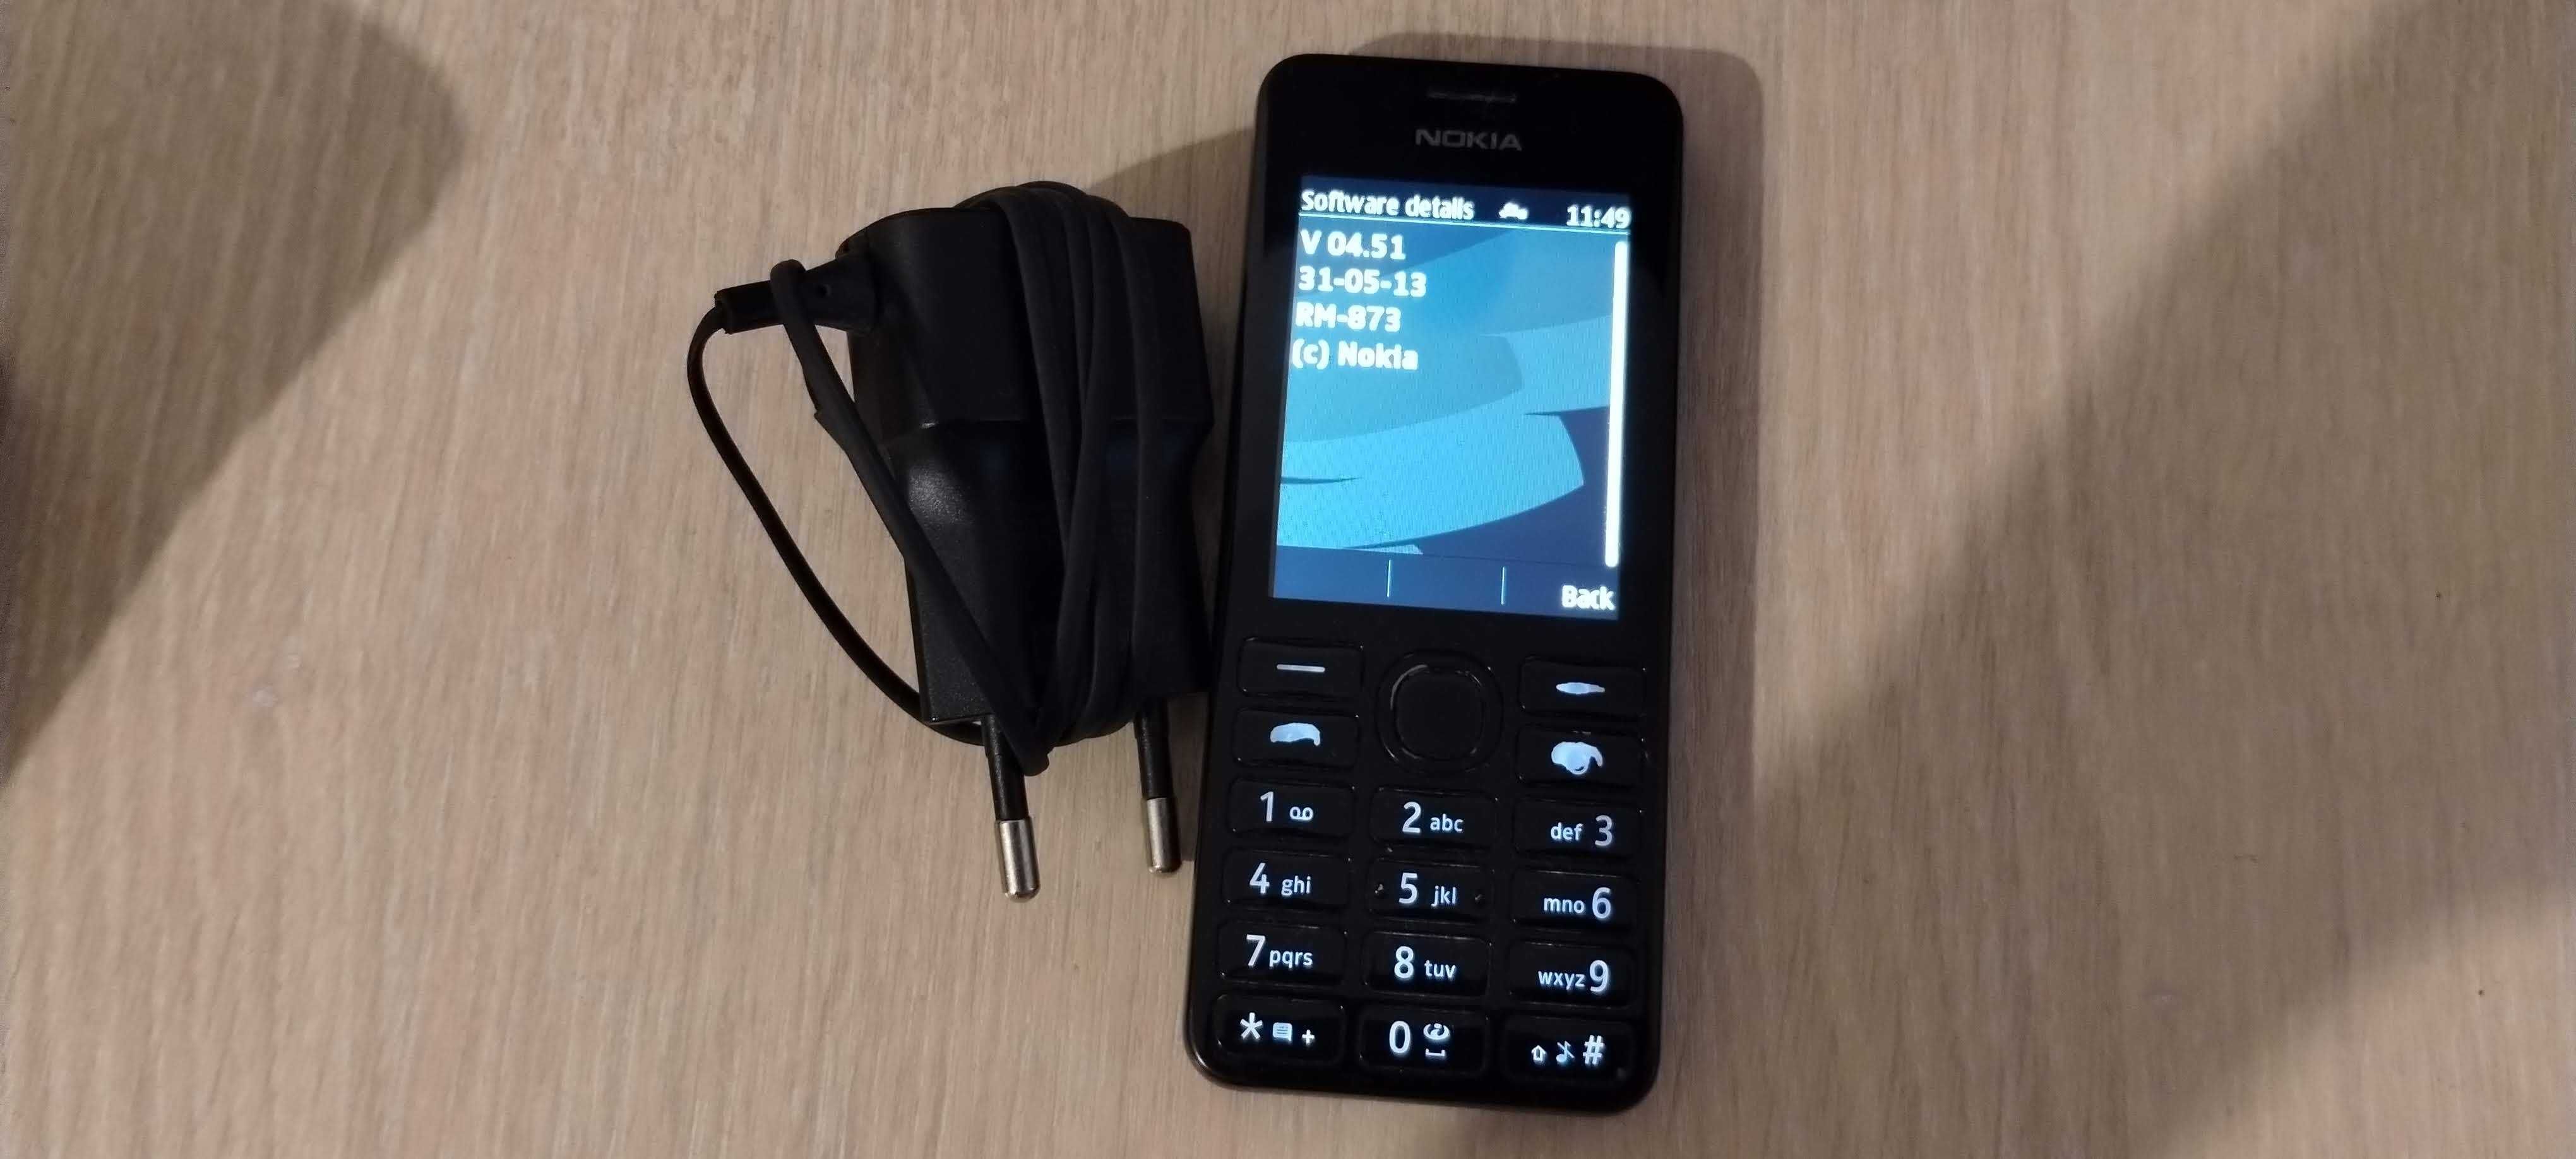 Nokia 206, incarcator, stare buna, liber retea